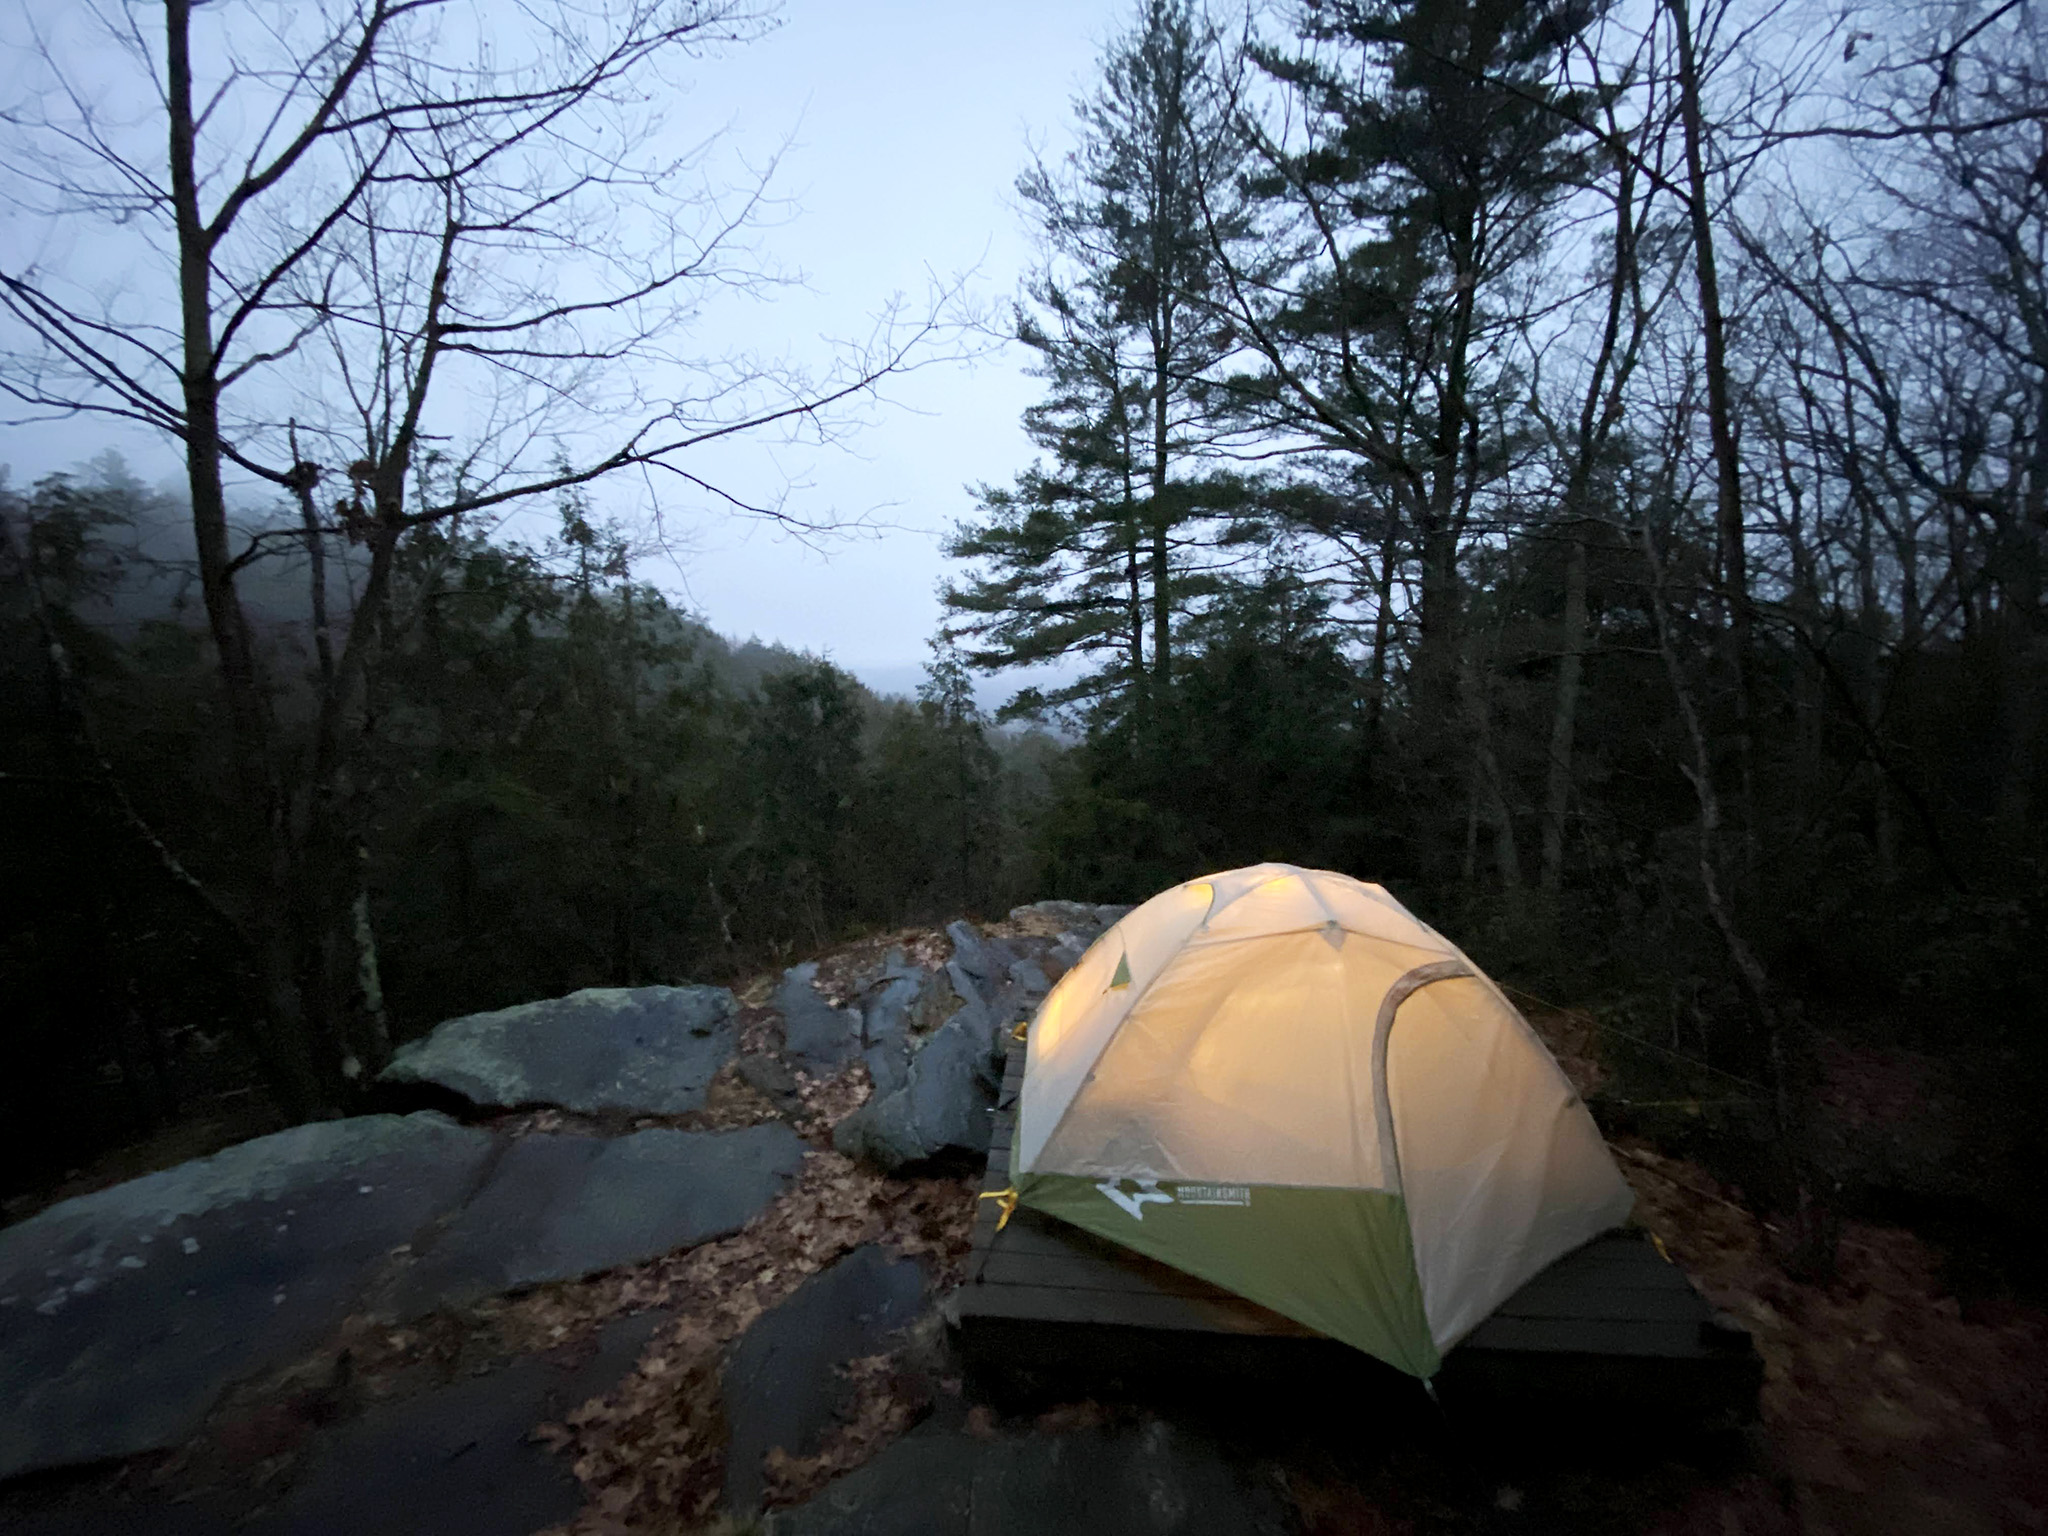 Trip report: An Appalachian Trail getaway in Great Barrington